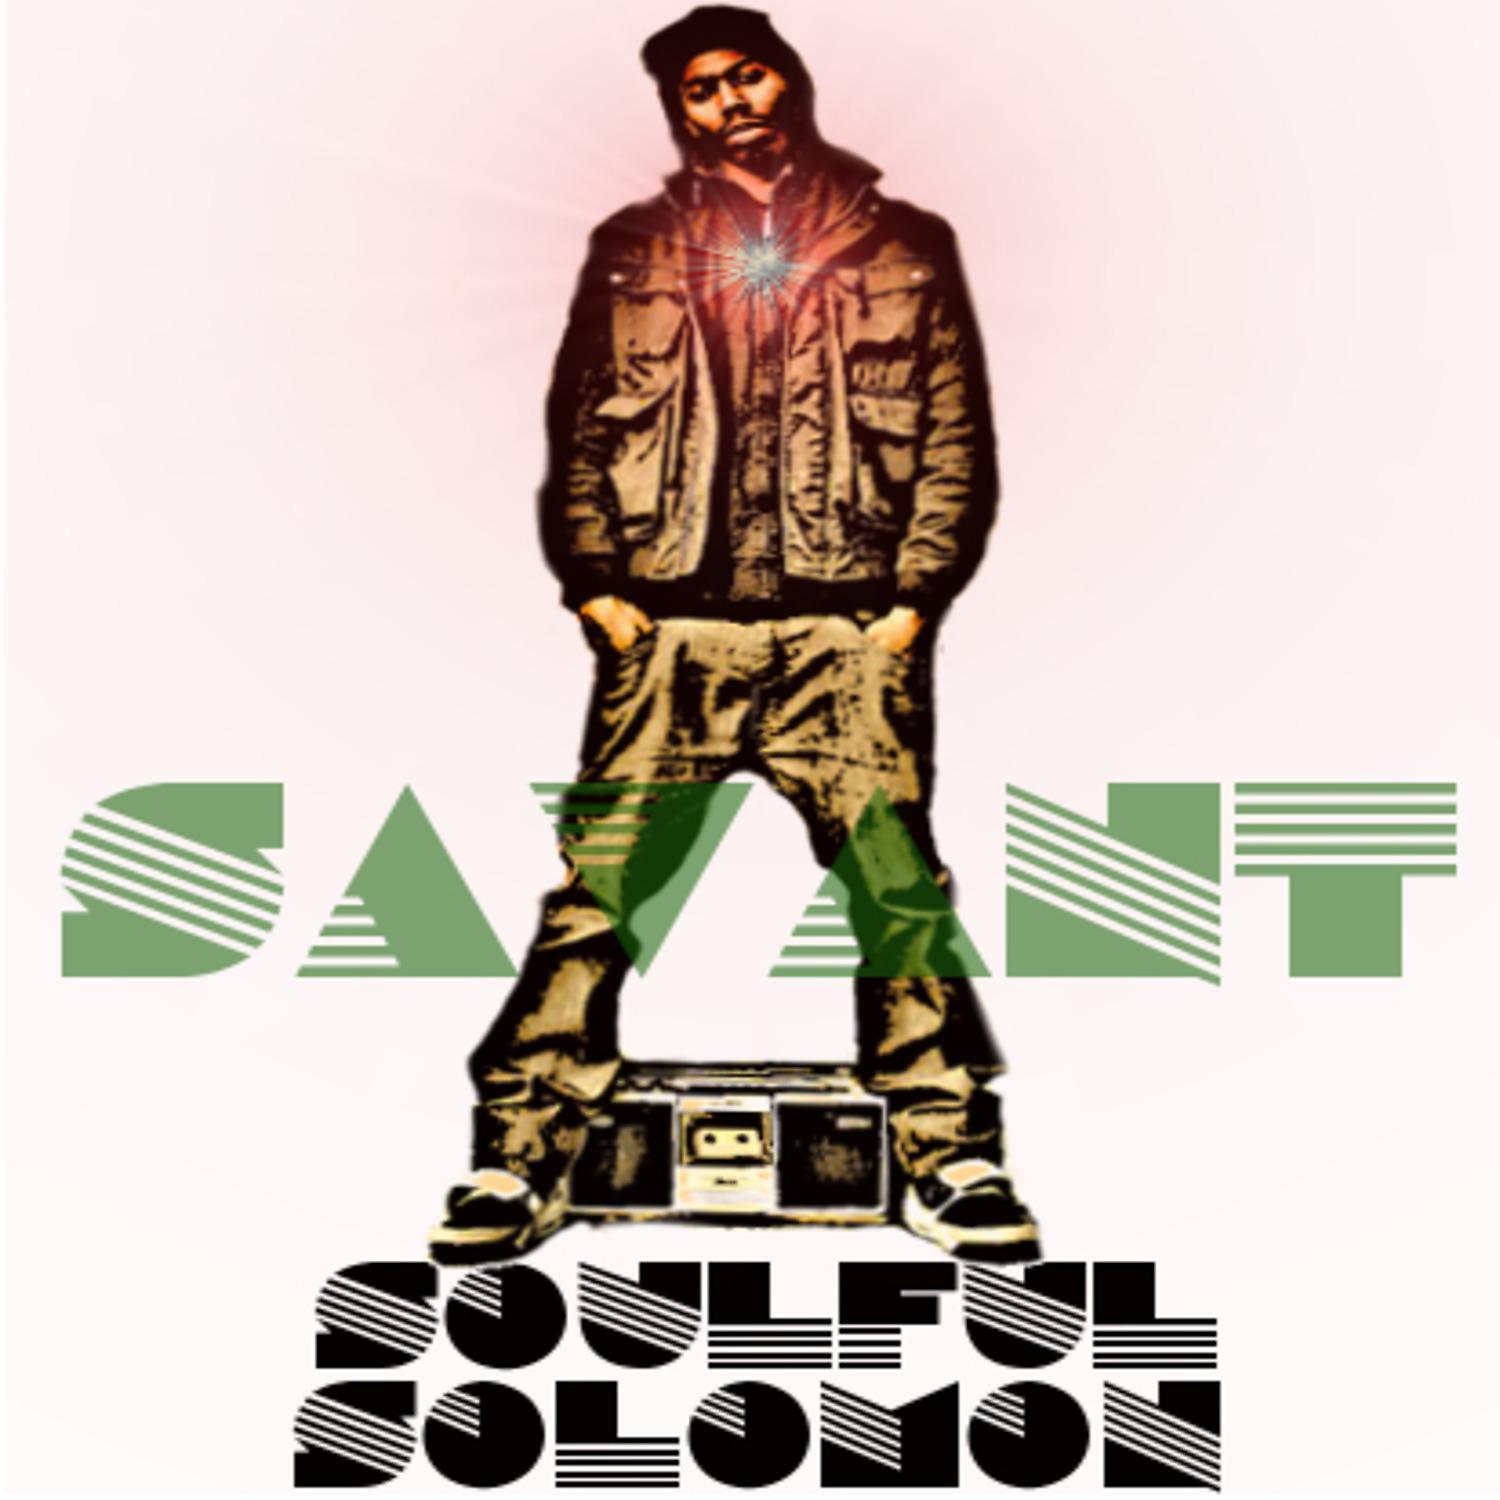 Постер альбома Savant